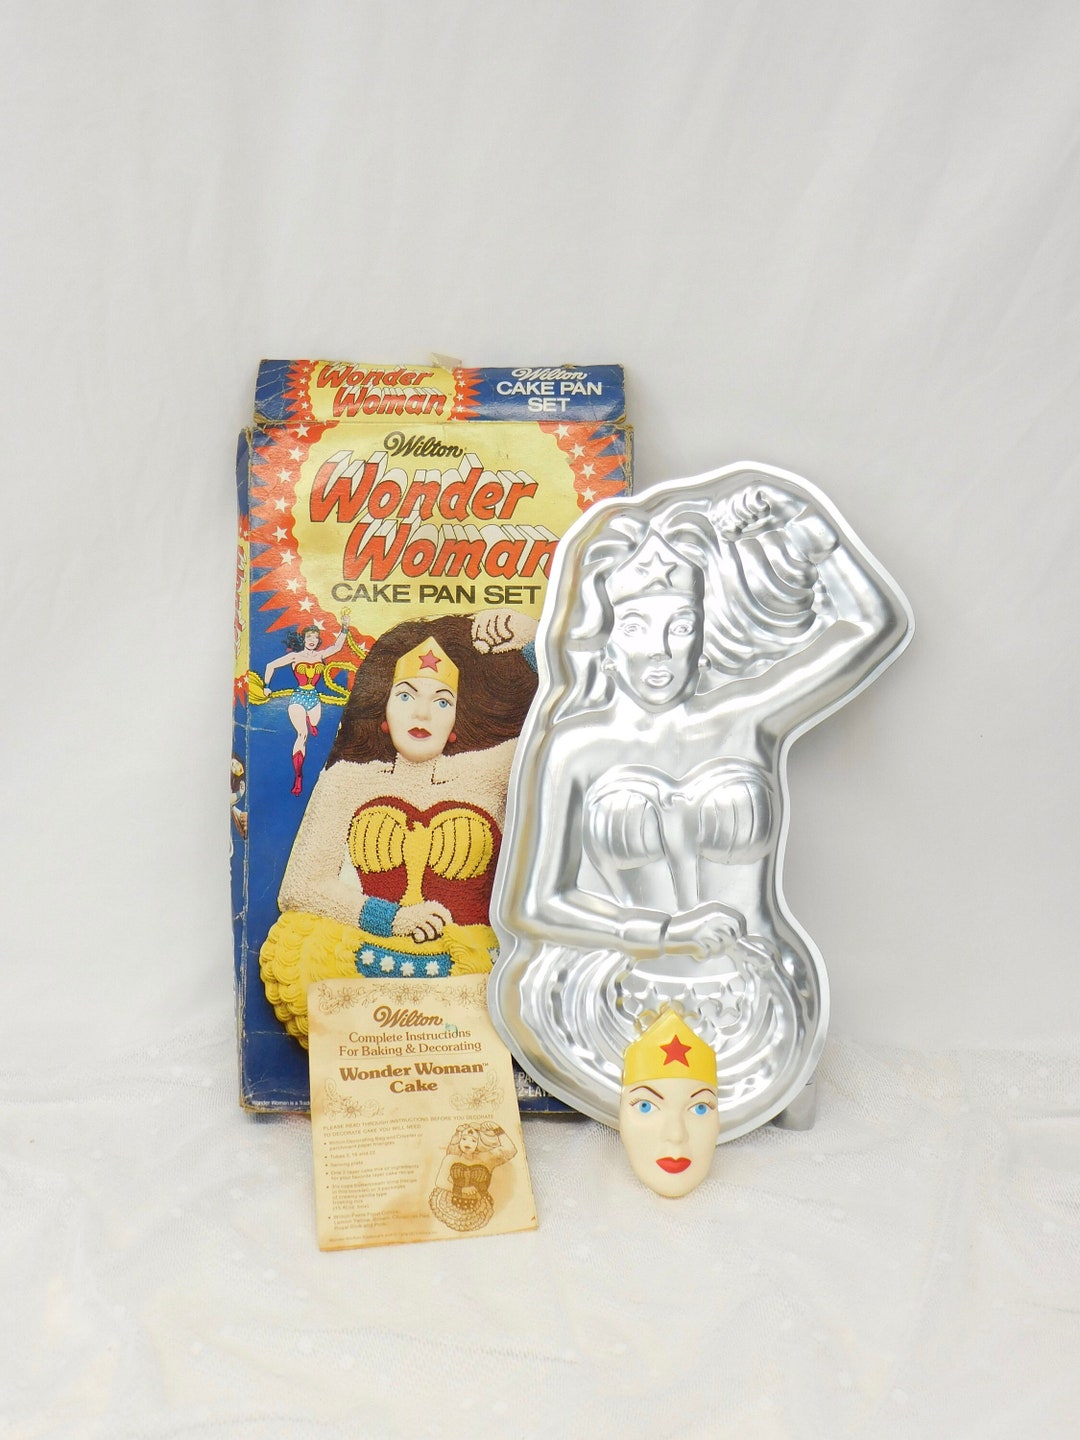 Vintage 1978 Wilton Wonder Woman Cake Pan Set, Complete